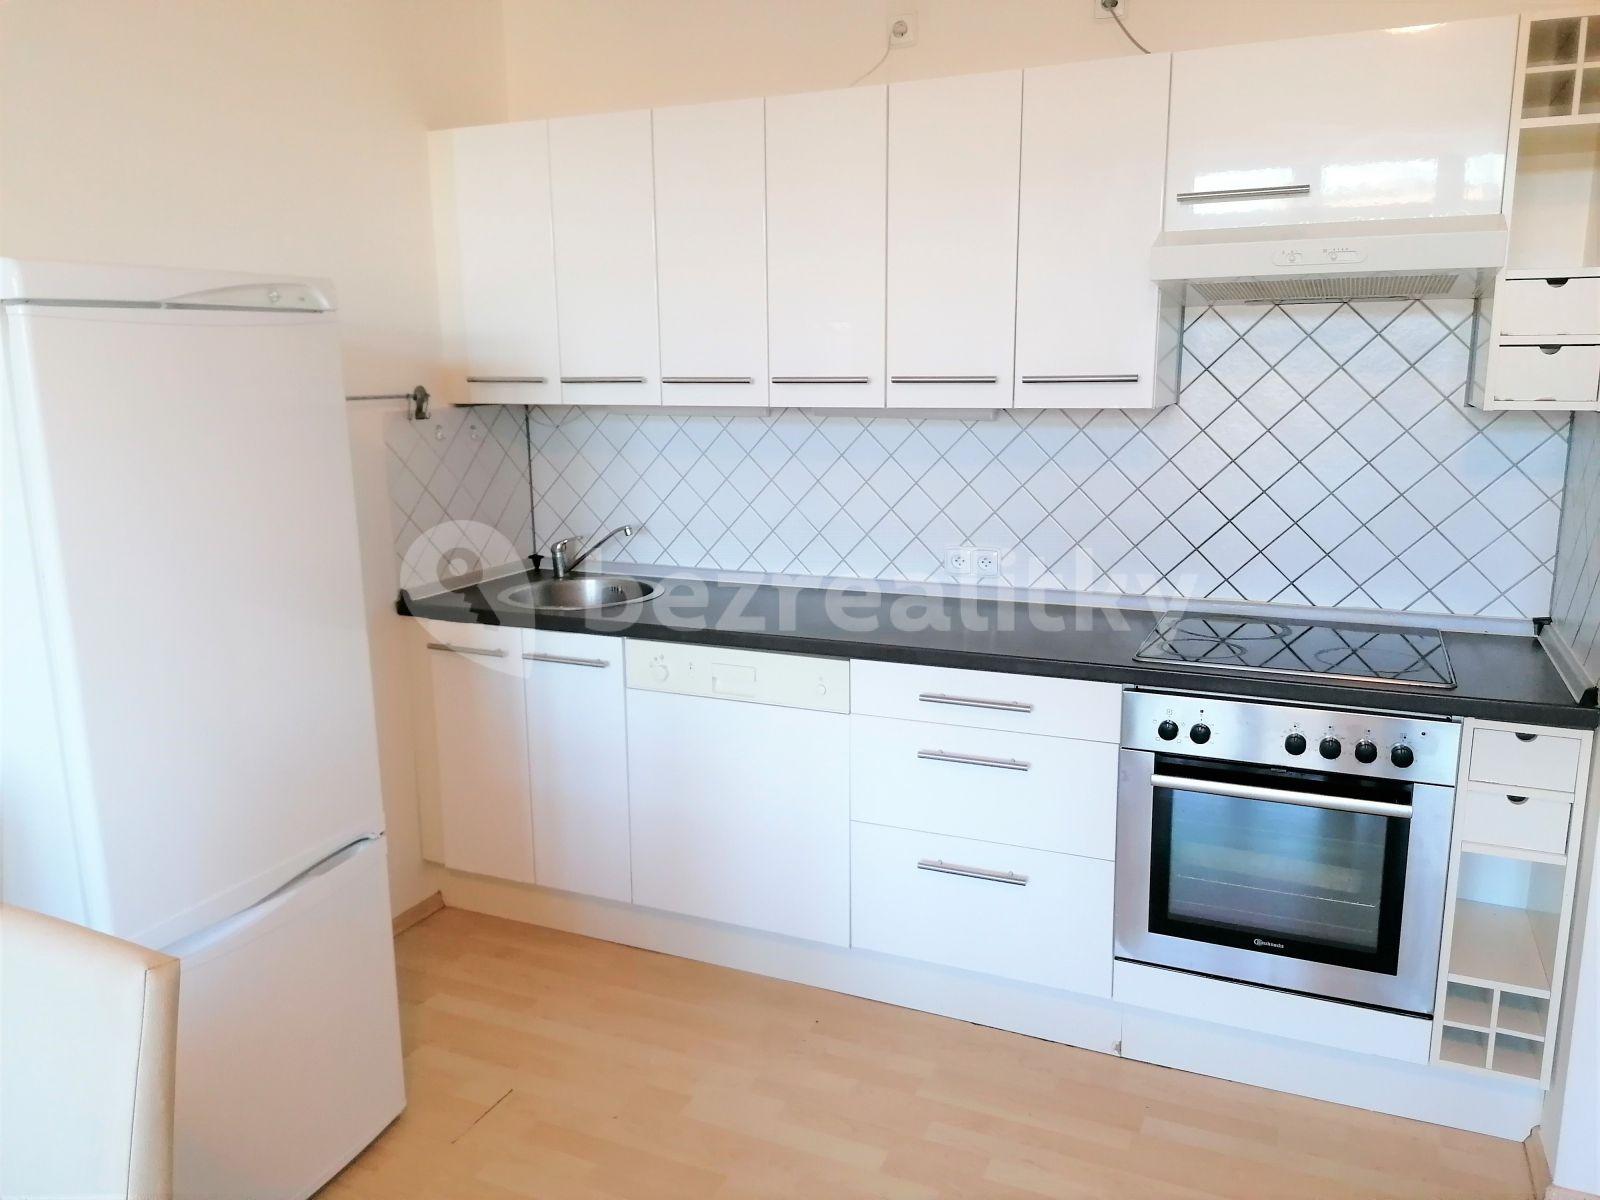 1 bedroom with open-plan kitchen flat for sale, 65 m², Prague, Prague